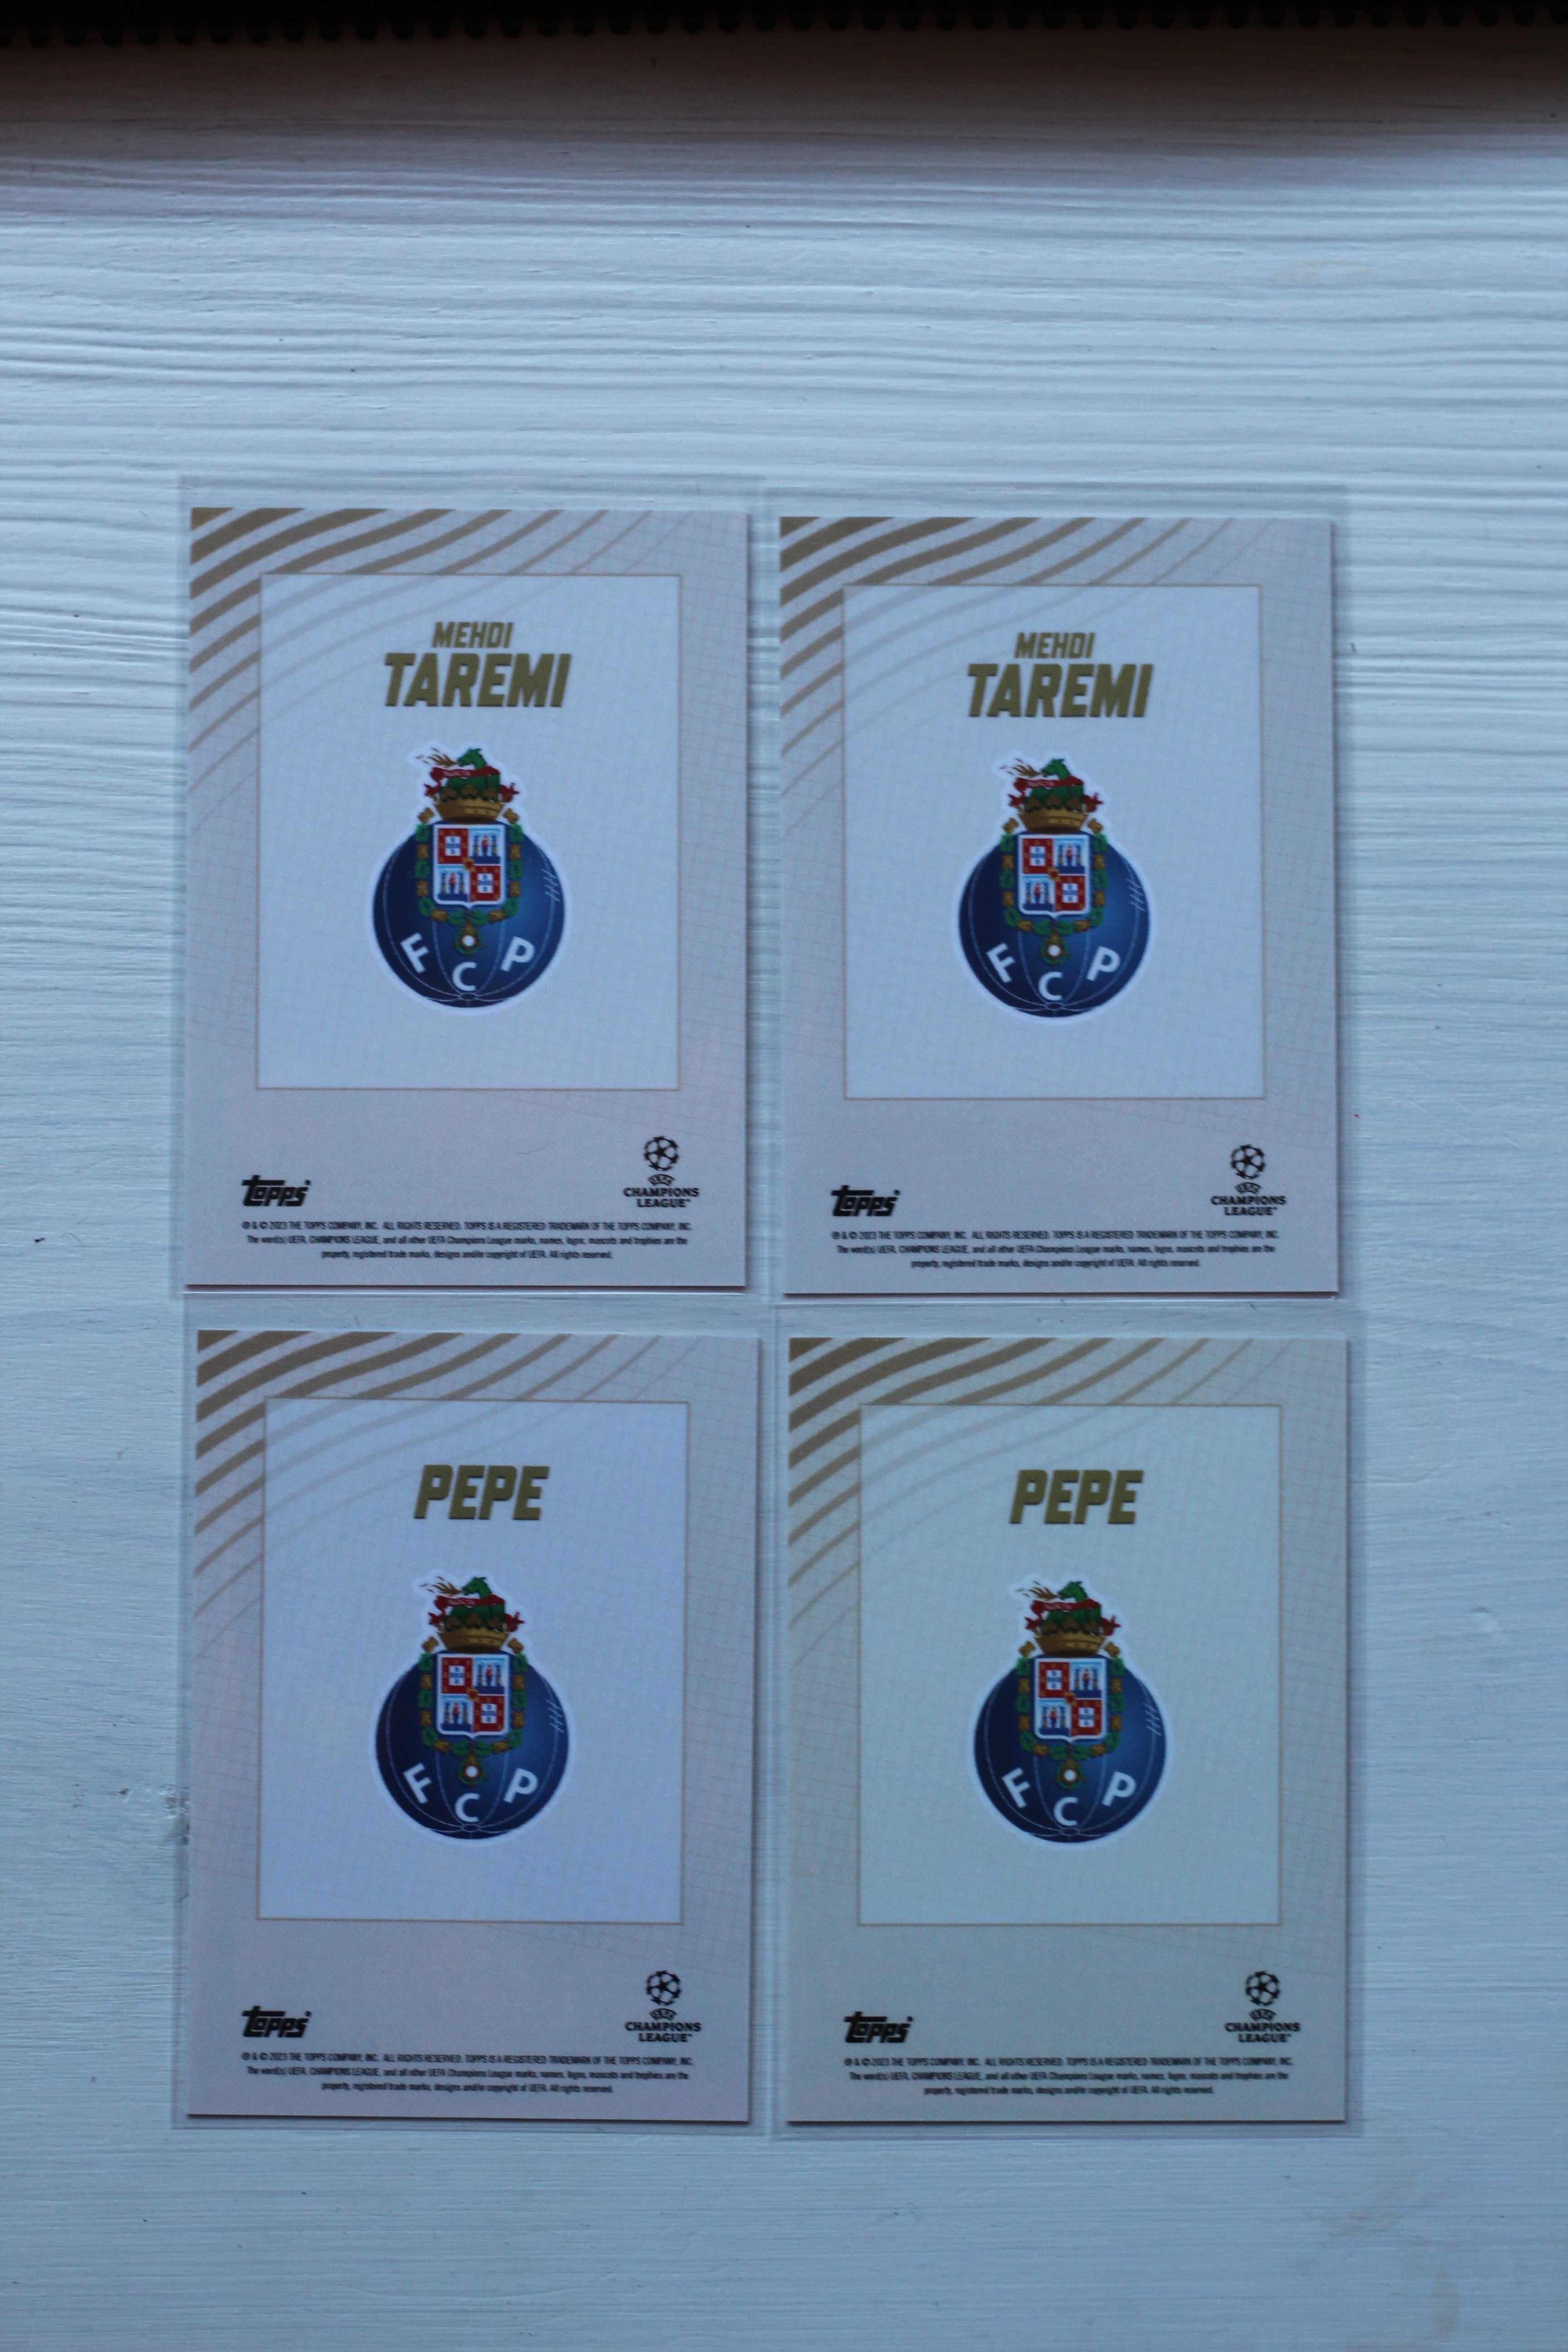 Cartas FC Porto - Topps Gold - Taremi e Pepe